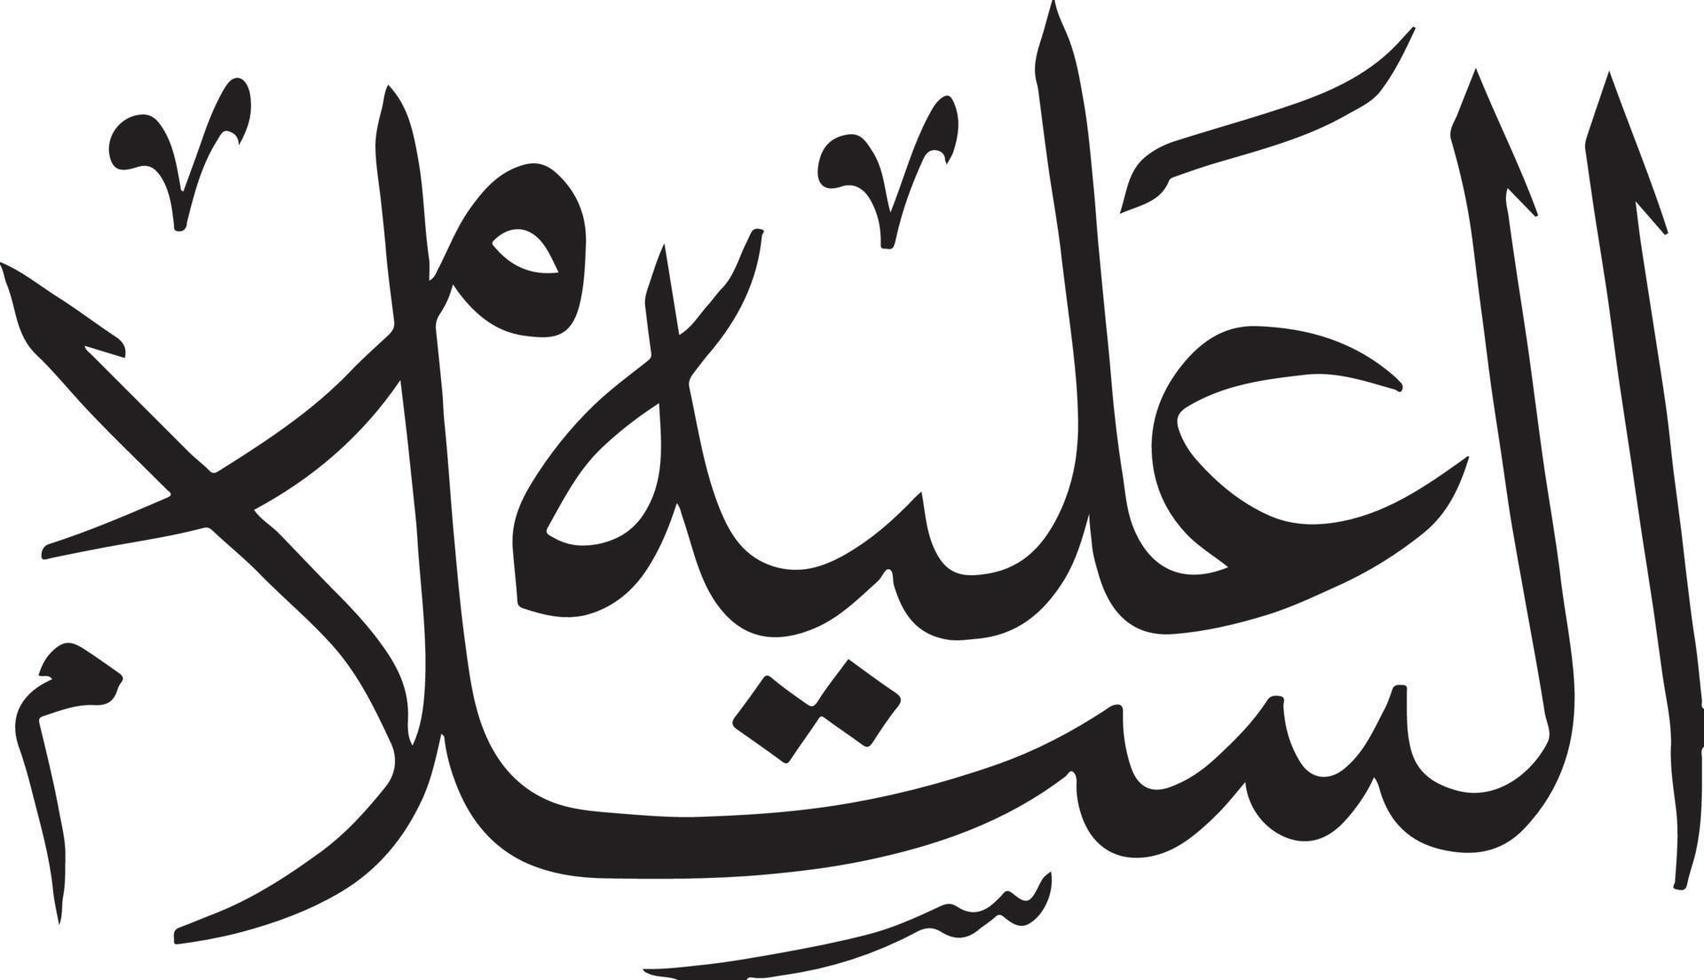 slaam calligraphie arabe islamique vecteur gratuit